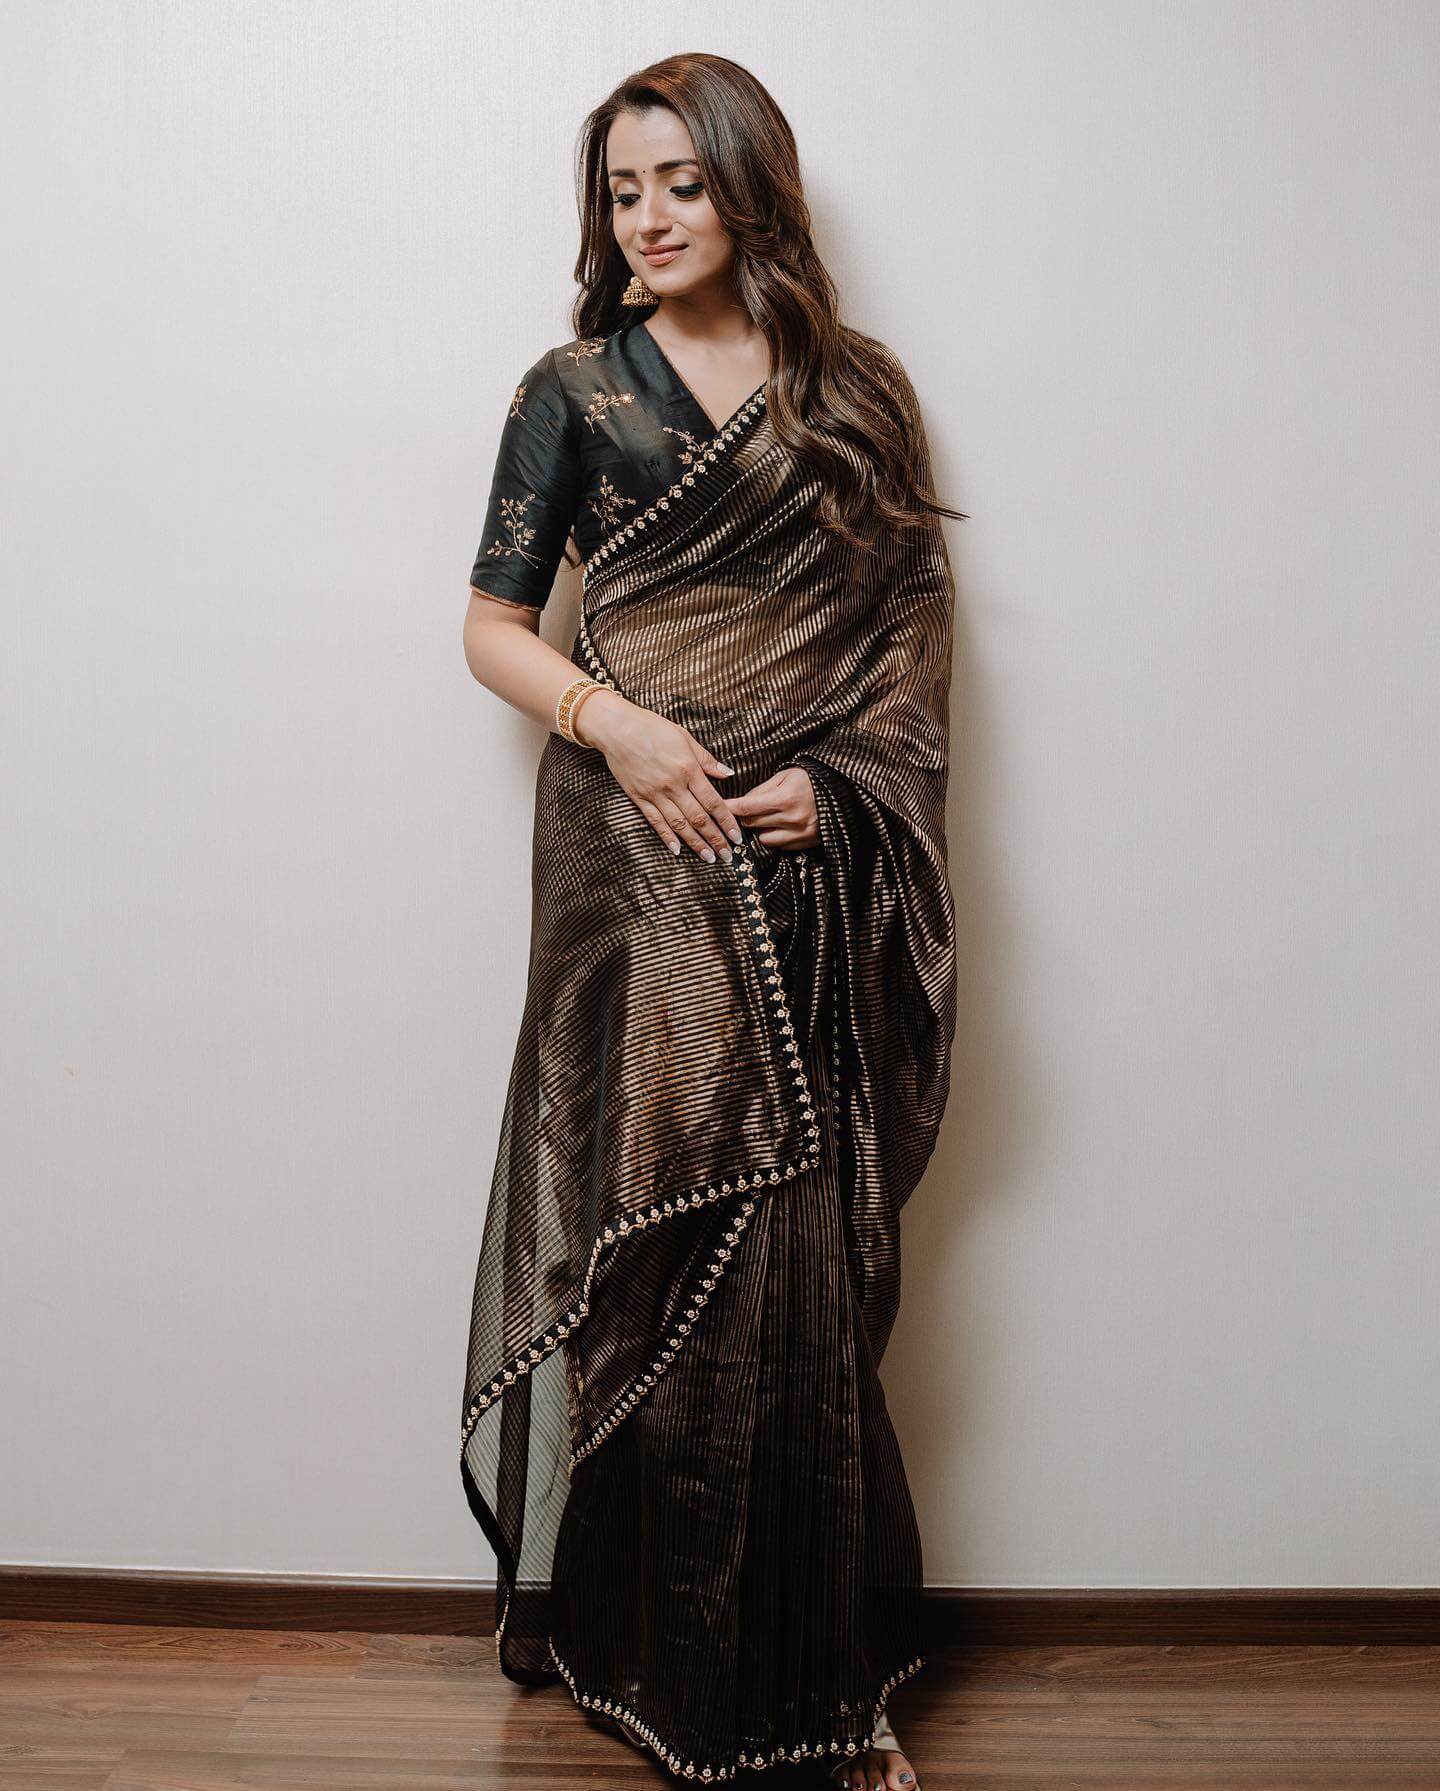 Trisha Krishnan Dazzling Look In Black & Gold Blend Organza Saree With V-Neck Blouse